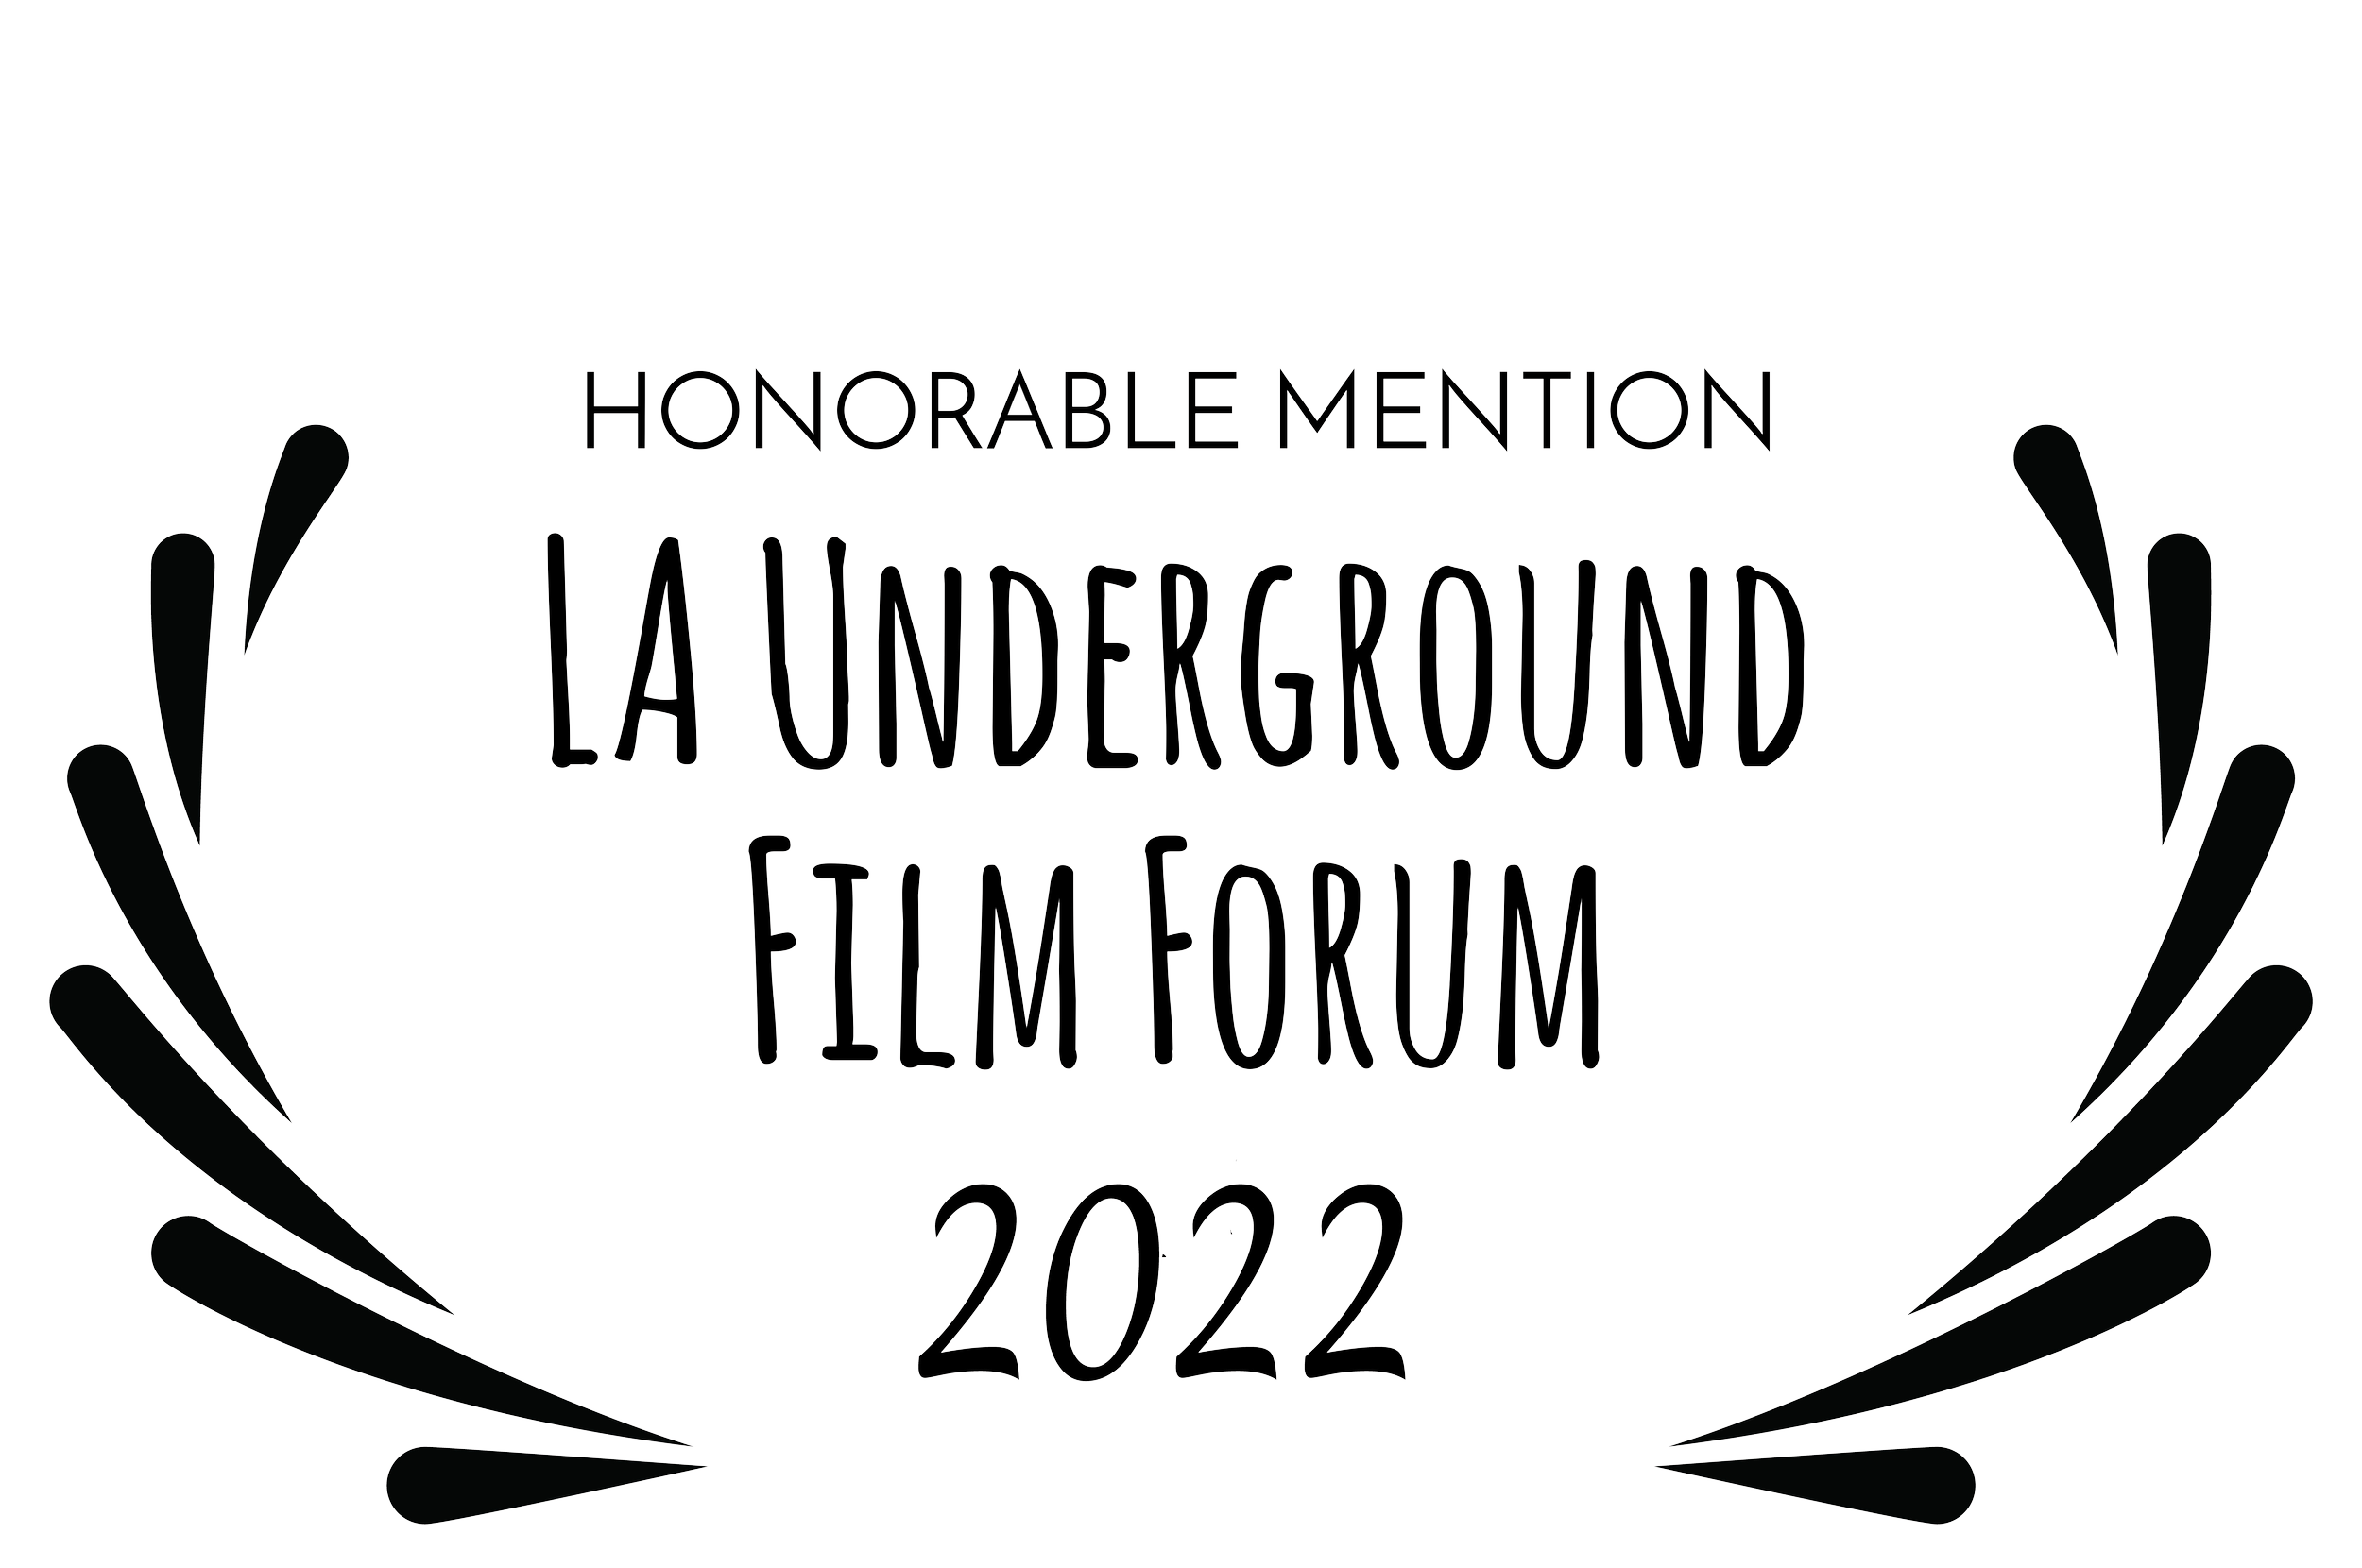 2022LAUndergroundFilmForum-HONORABLEMENTION_onwhite.png